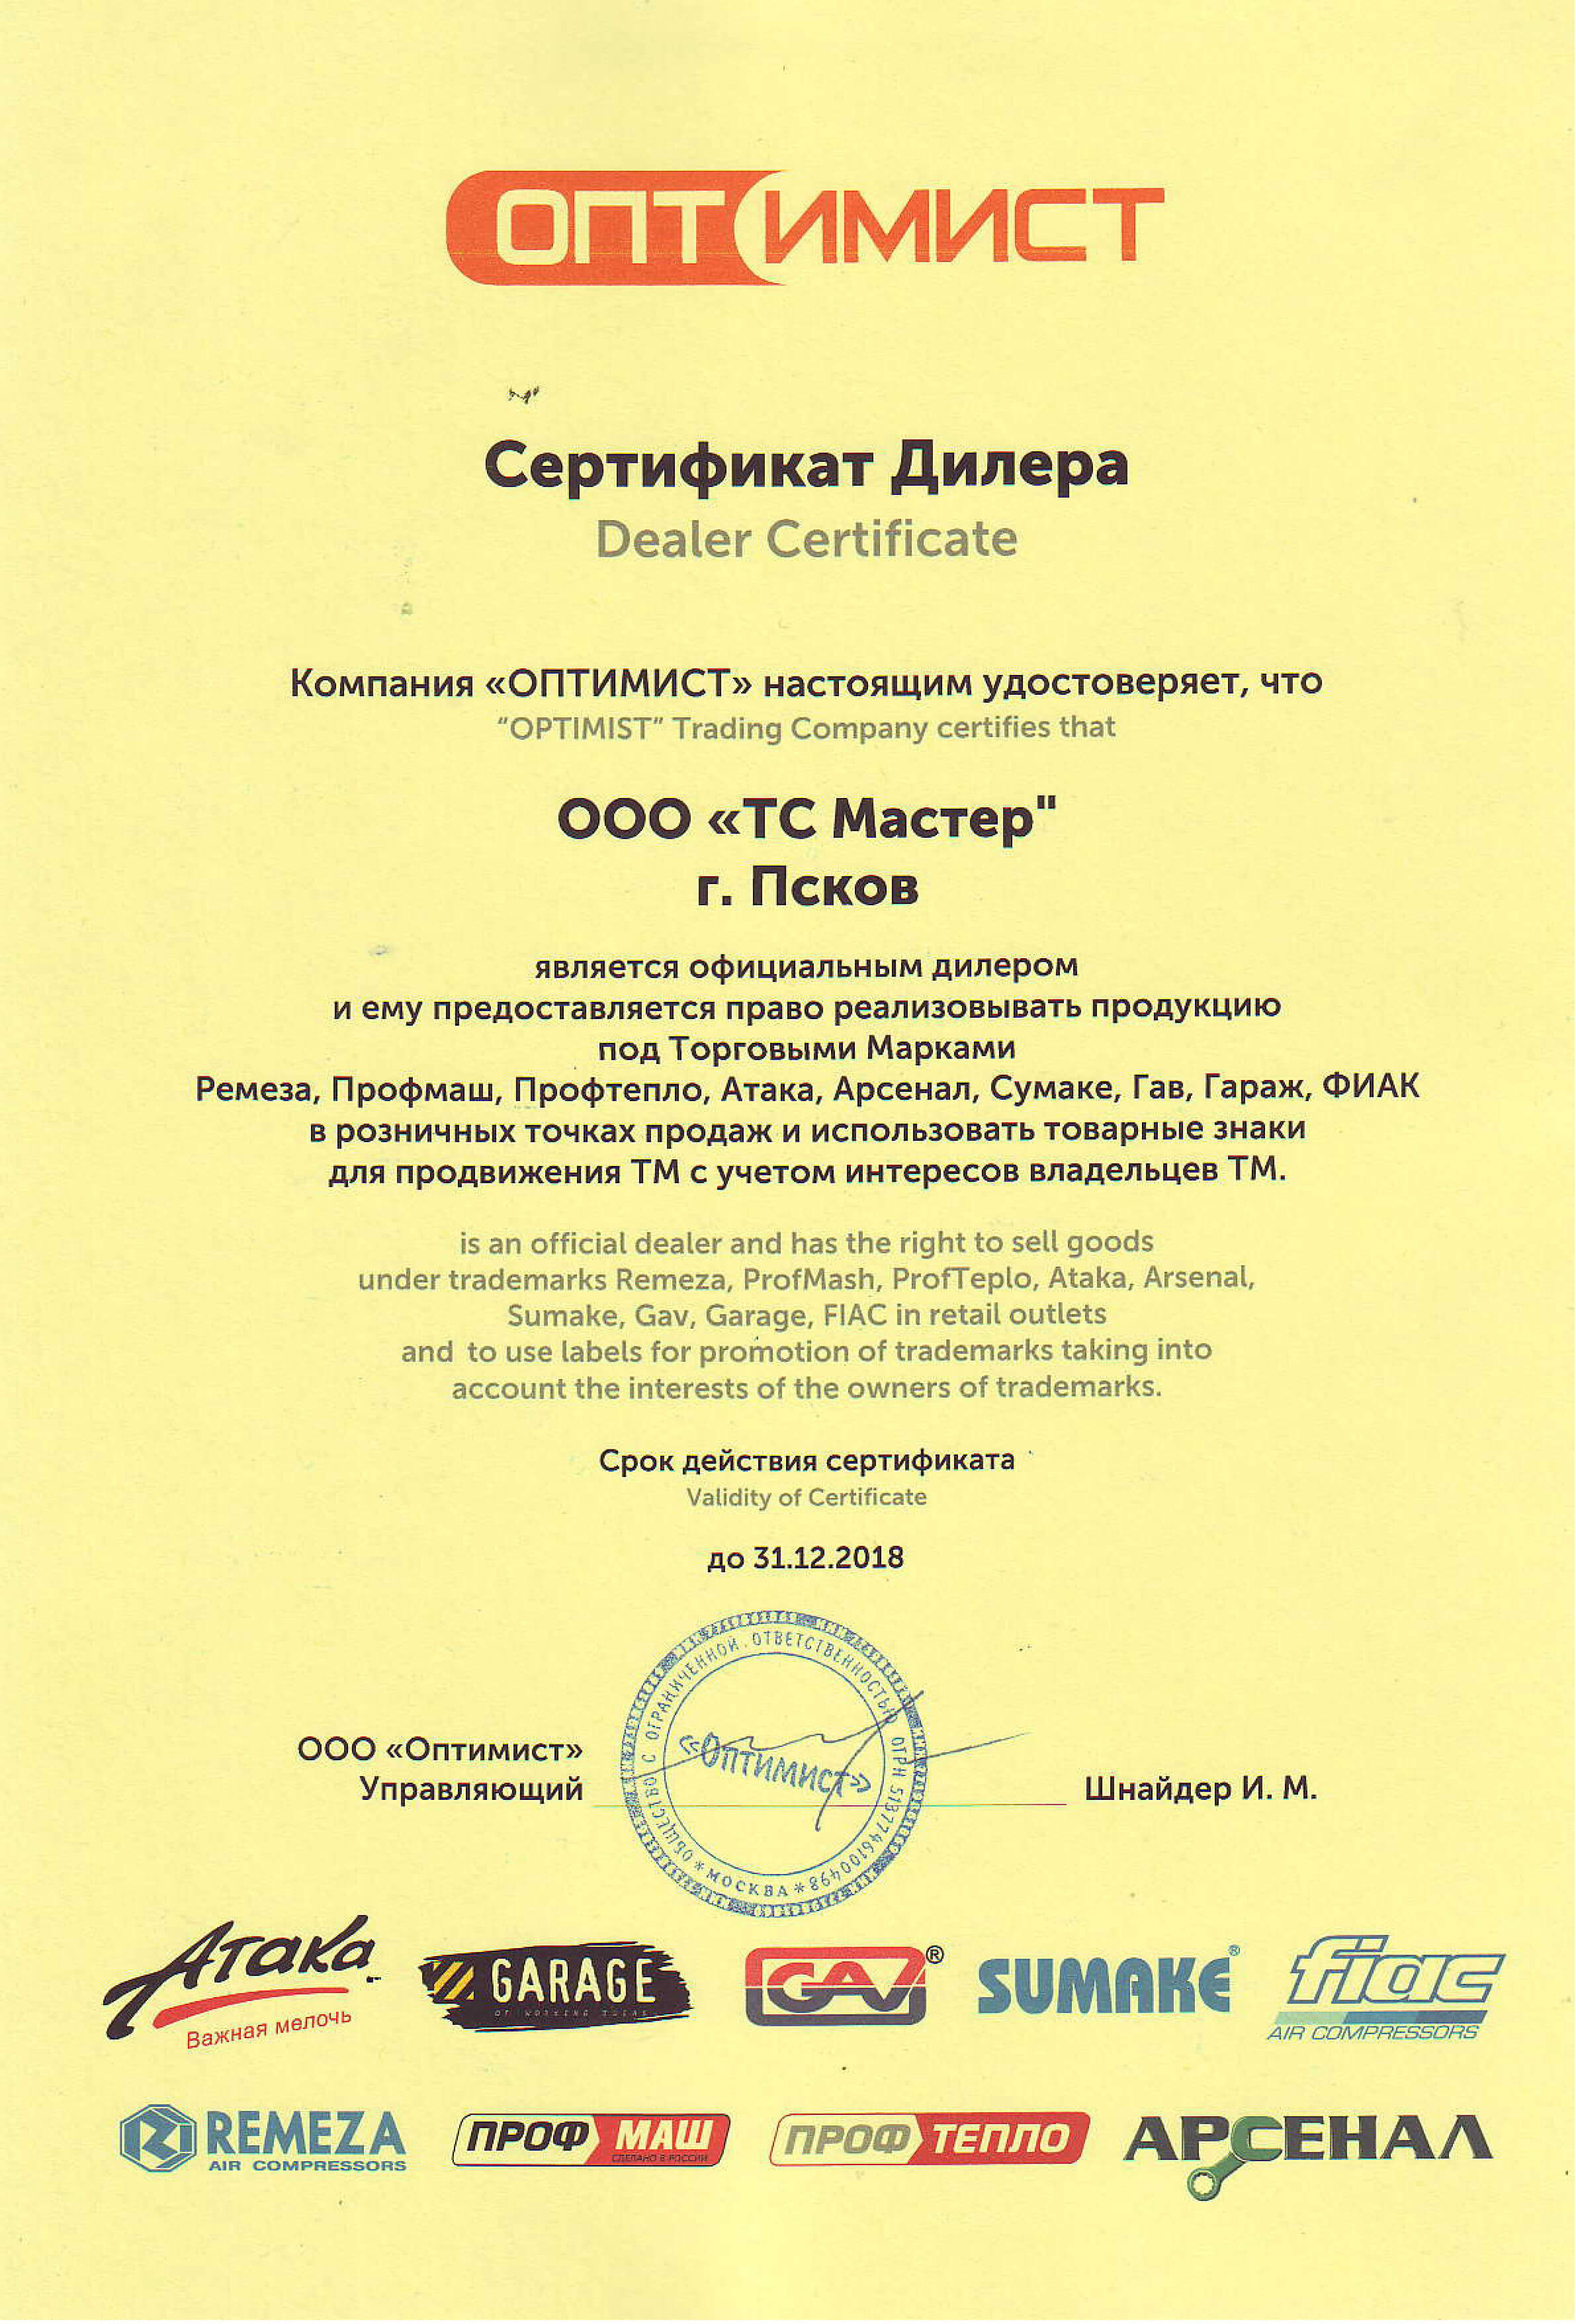 Сертификат дилера ZFxmMXf7-CxccHxgmkVeW6HlQh_RmU6E.jpg